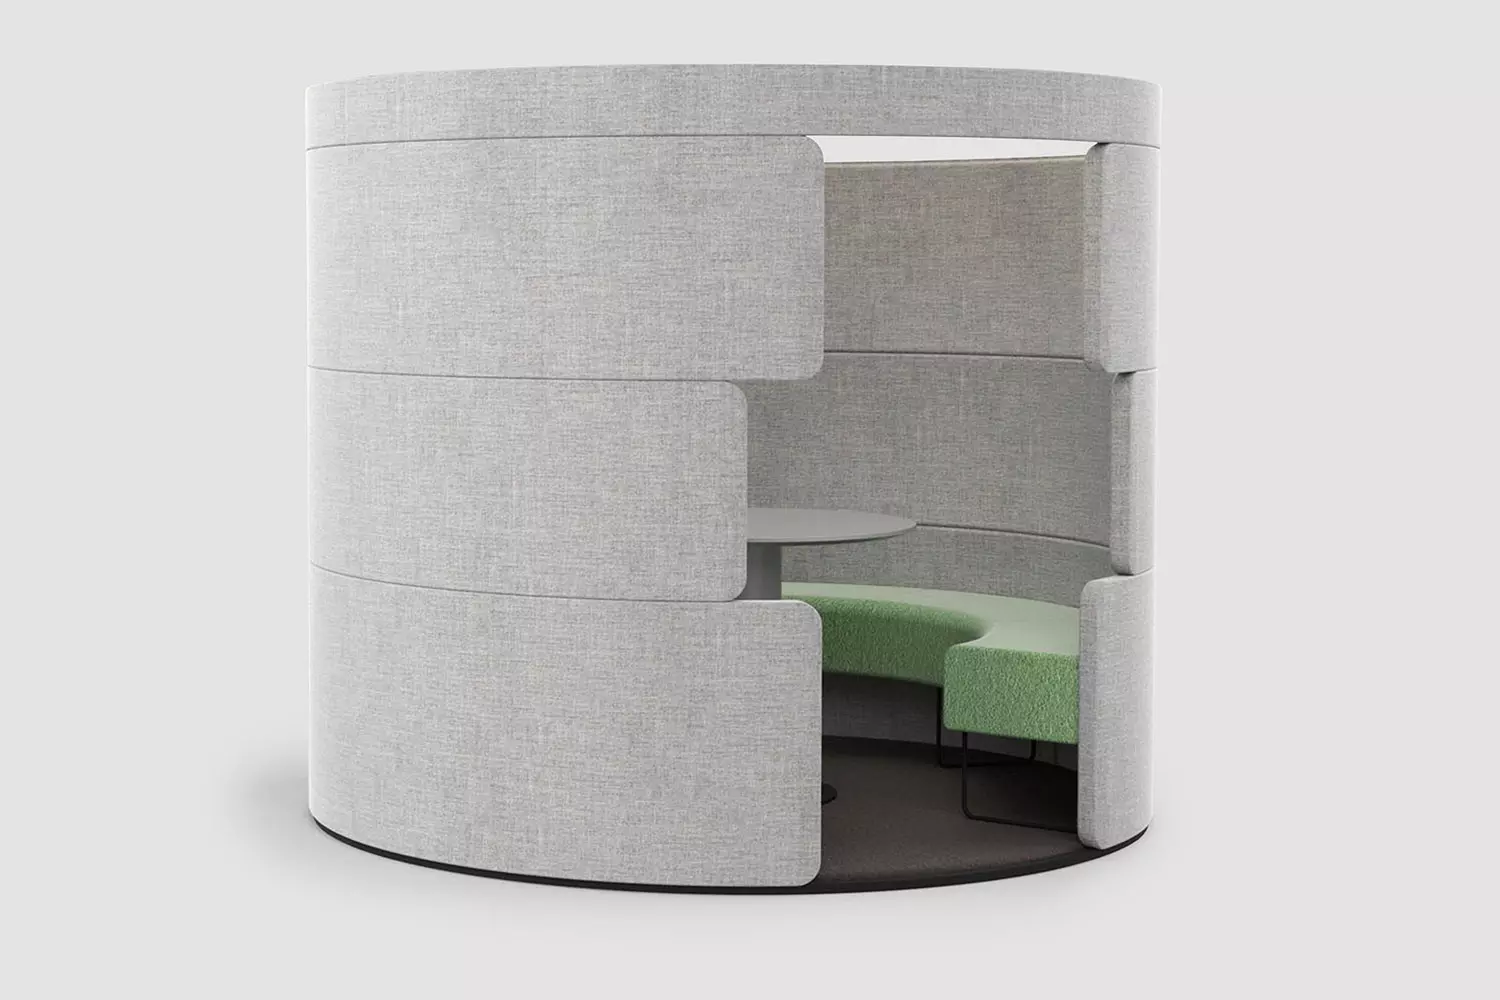 PARCS Toguna low,Spatial organization Sofa Workplace system Desk Workbench, Bene Office furniture, Image 1